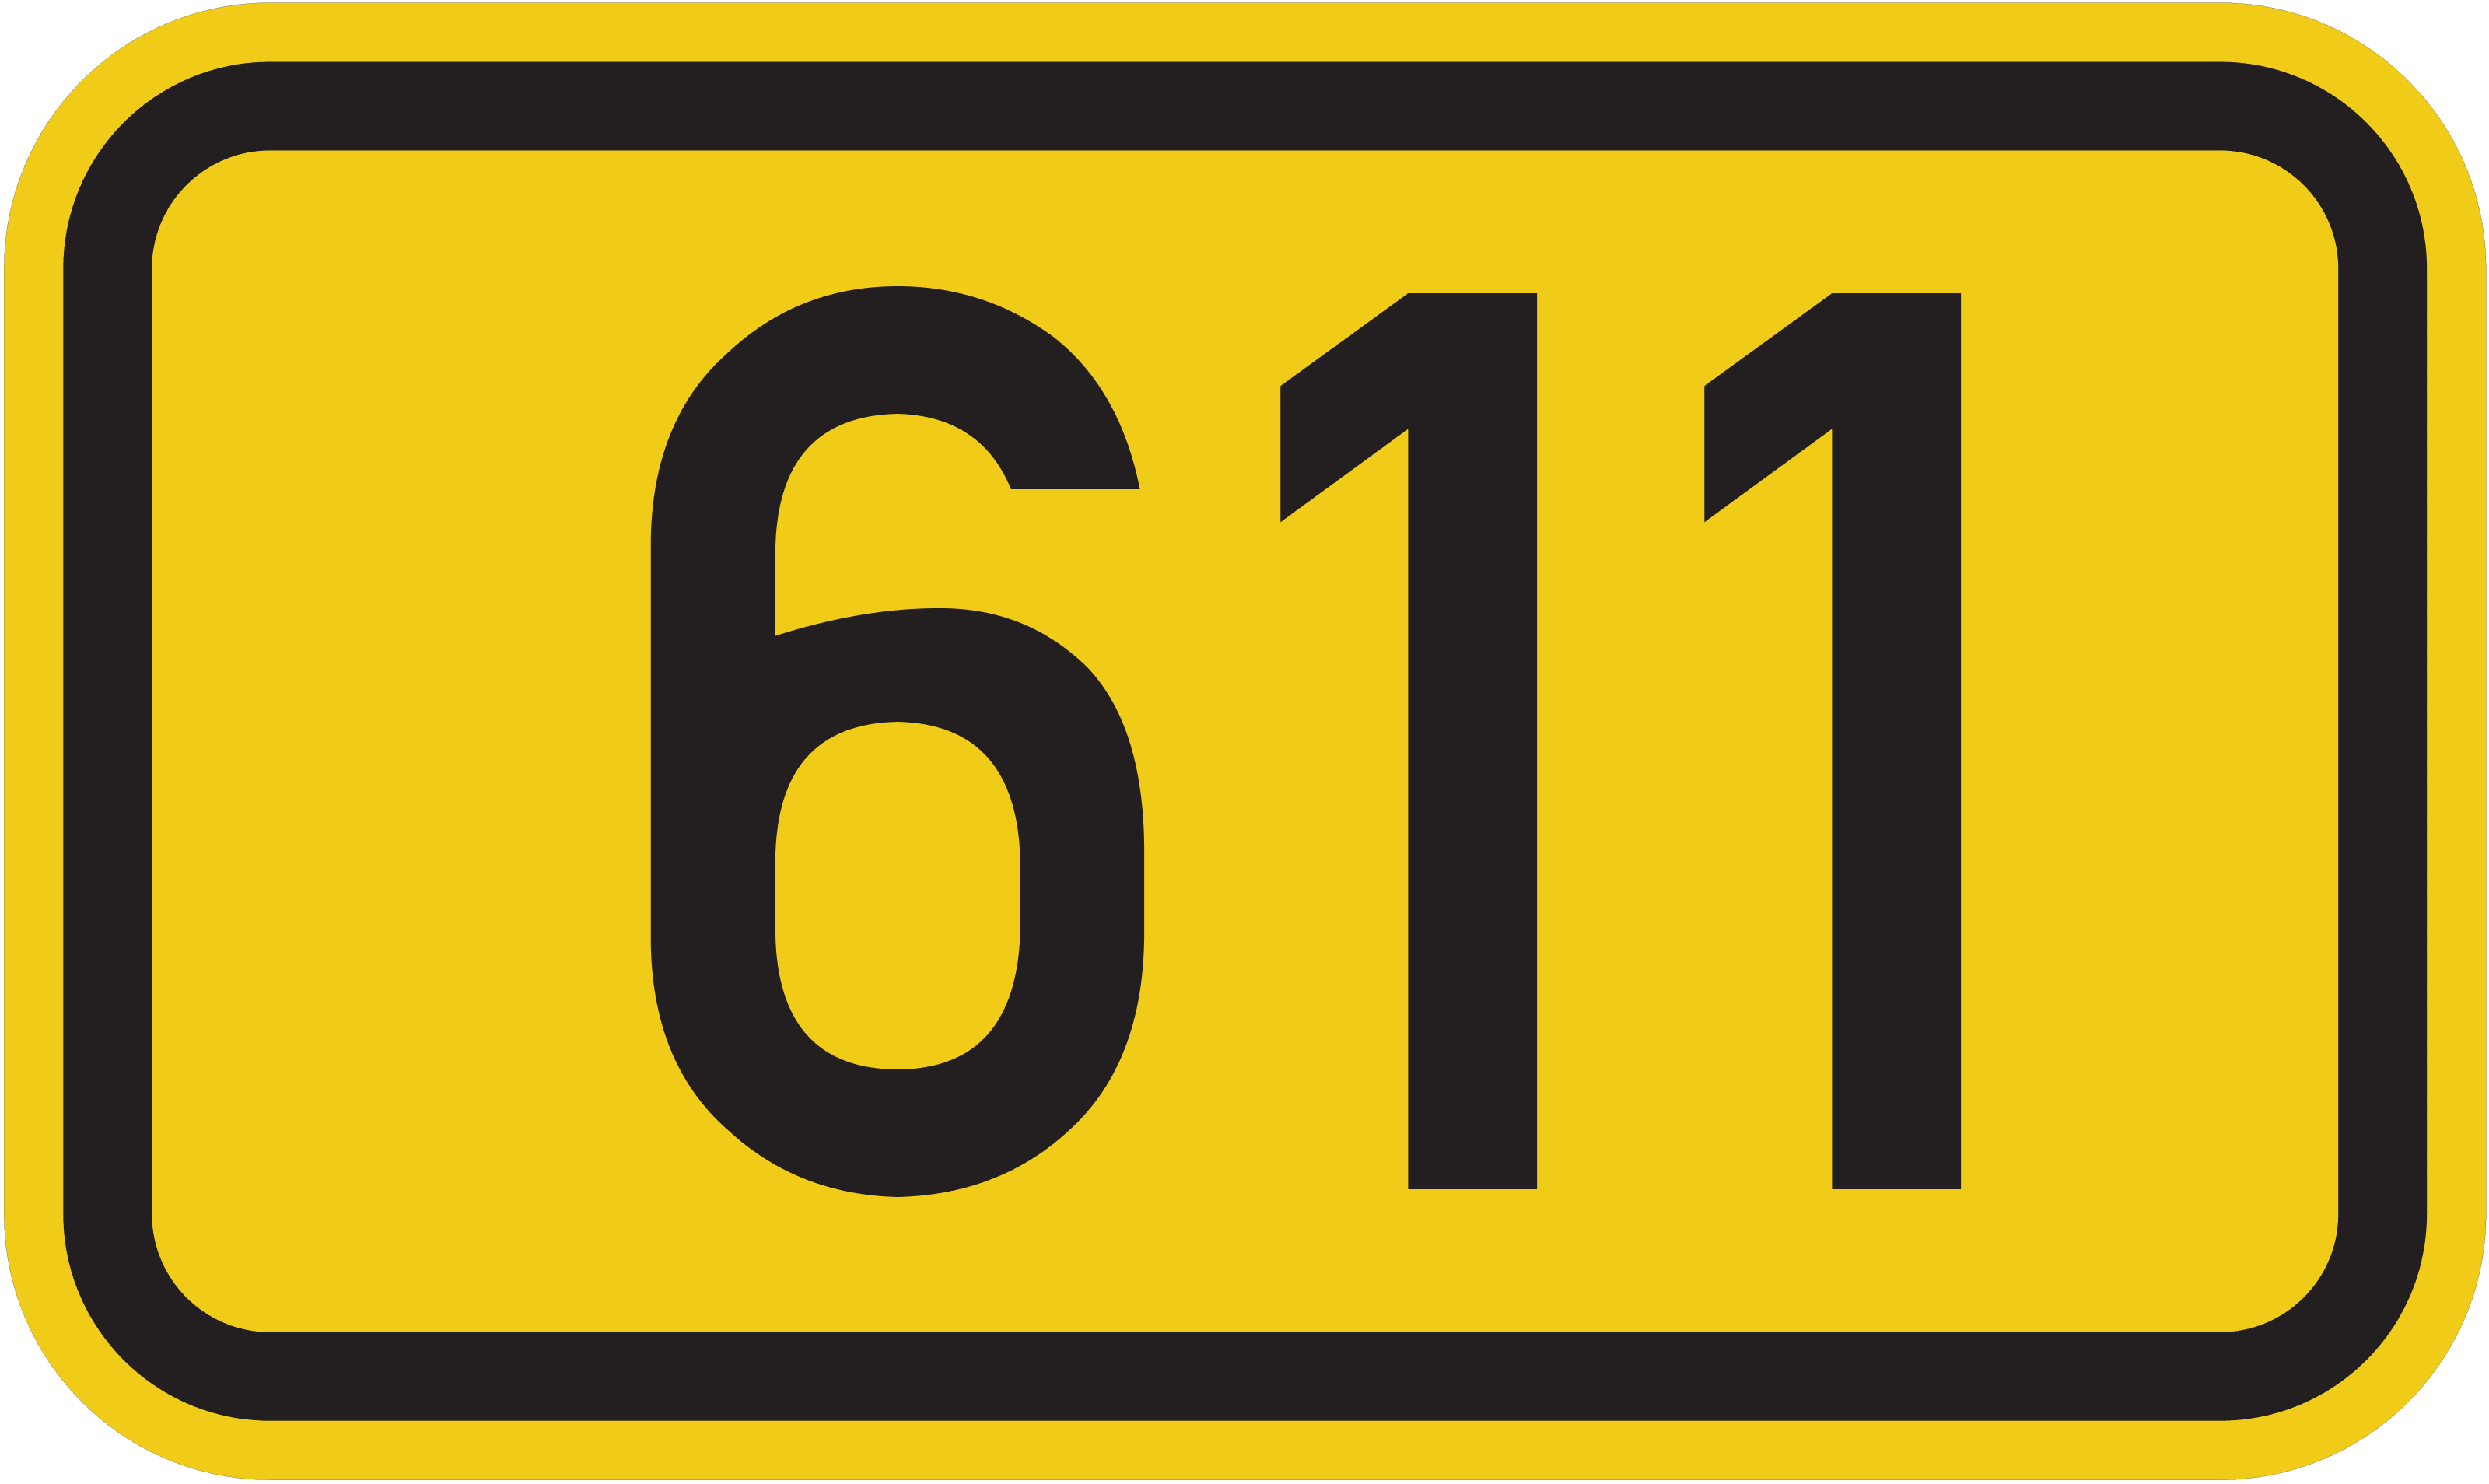 Straßenschild Bundesstraße 611